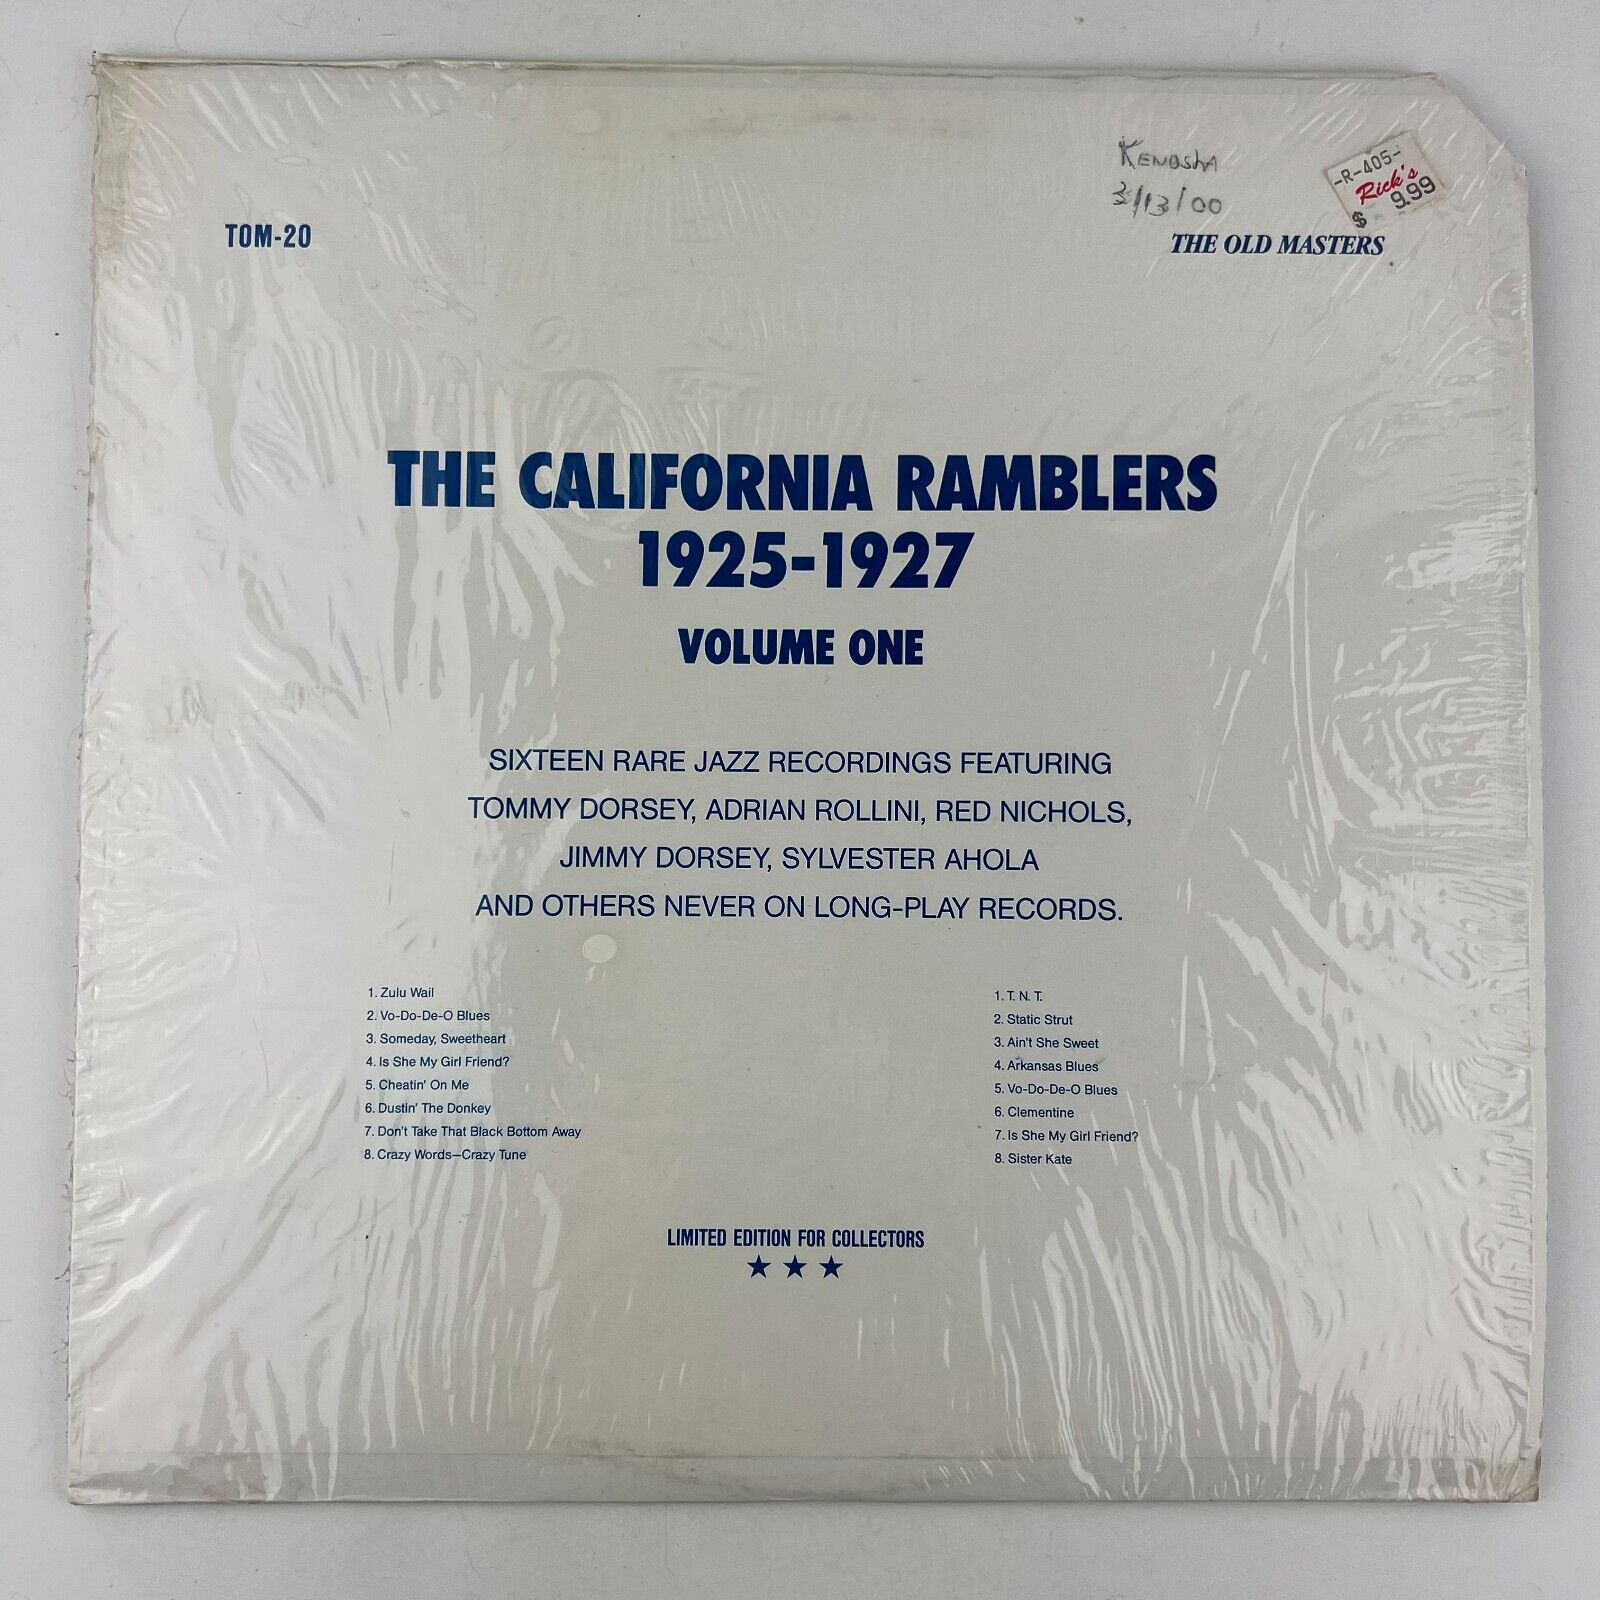 The California Ramblers – 1925-1927 Volume One Vinyl LP Record Album TOM-20